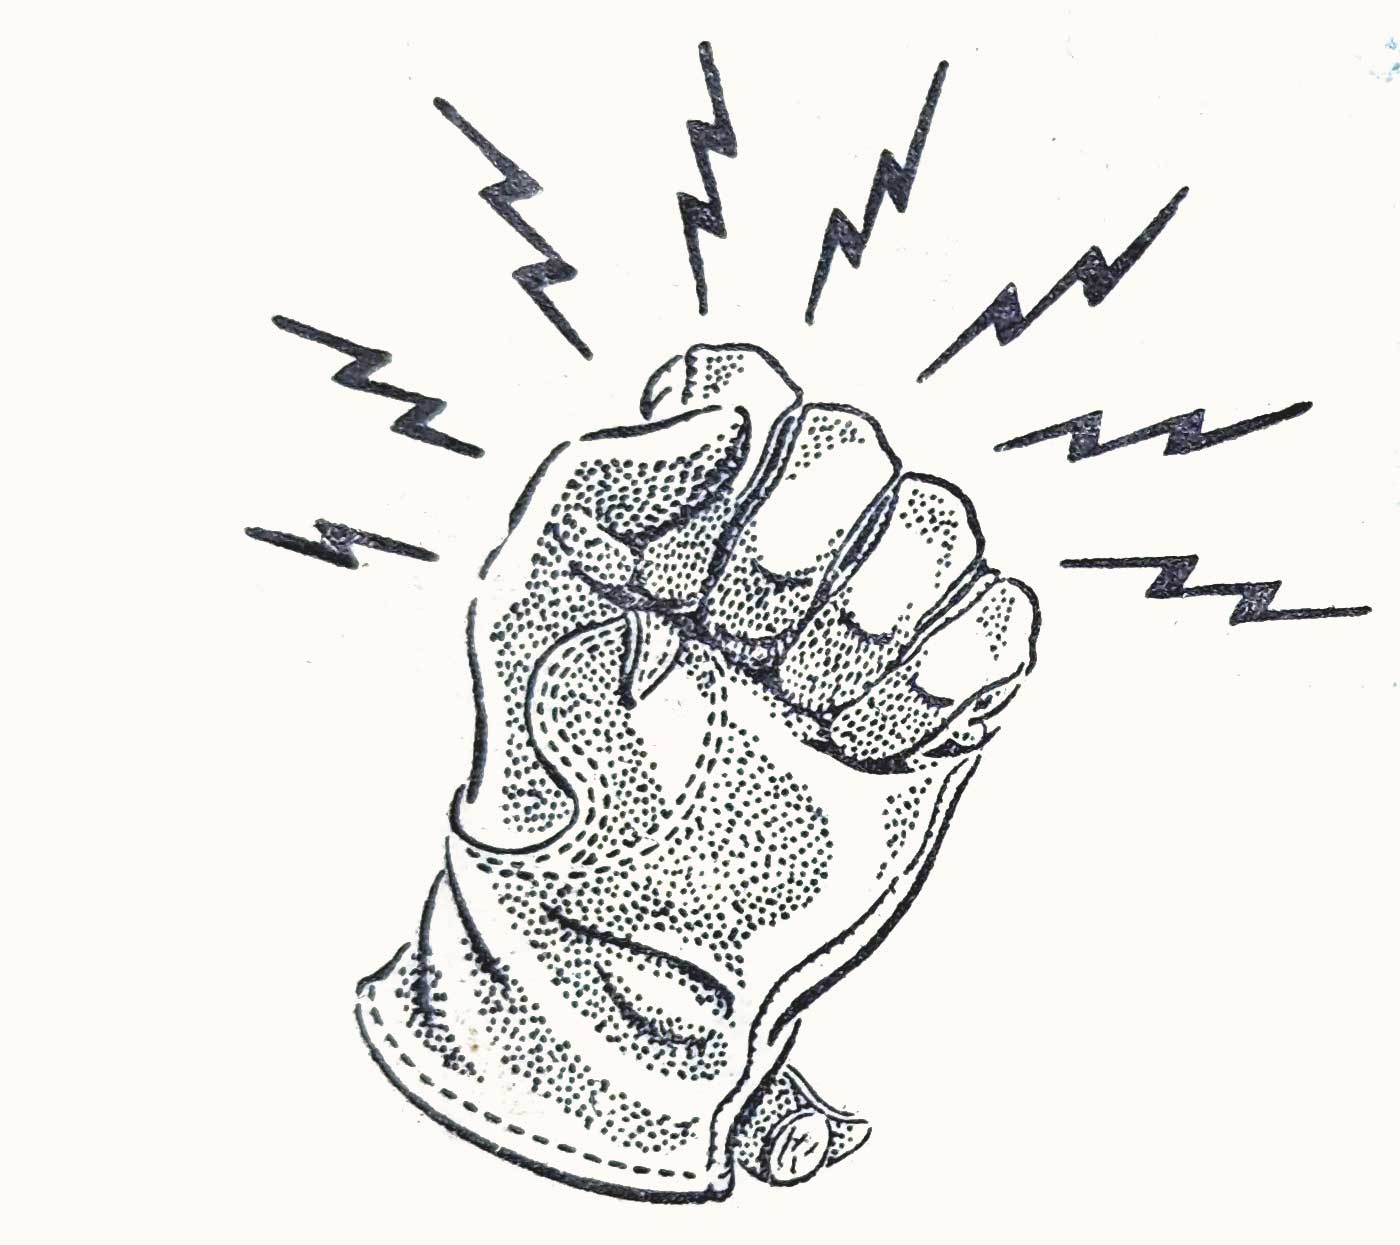 Watson Gloves Vintage Leather Power Lightning Glove